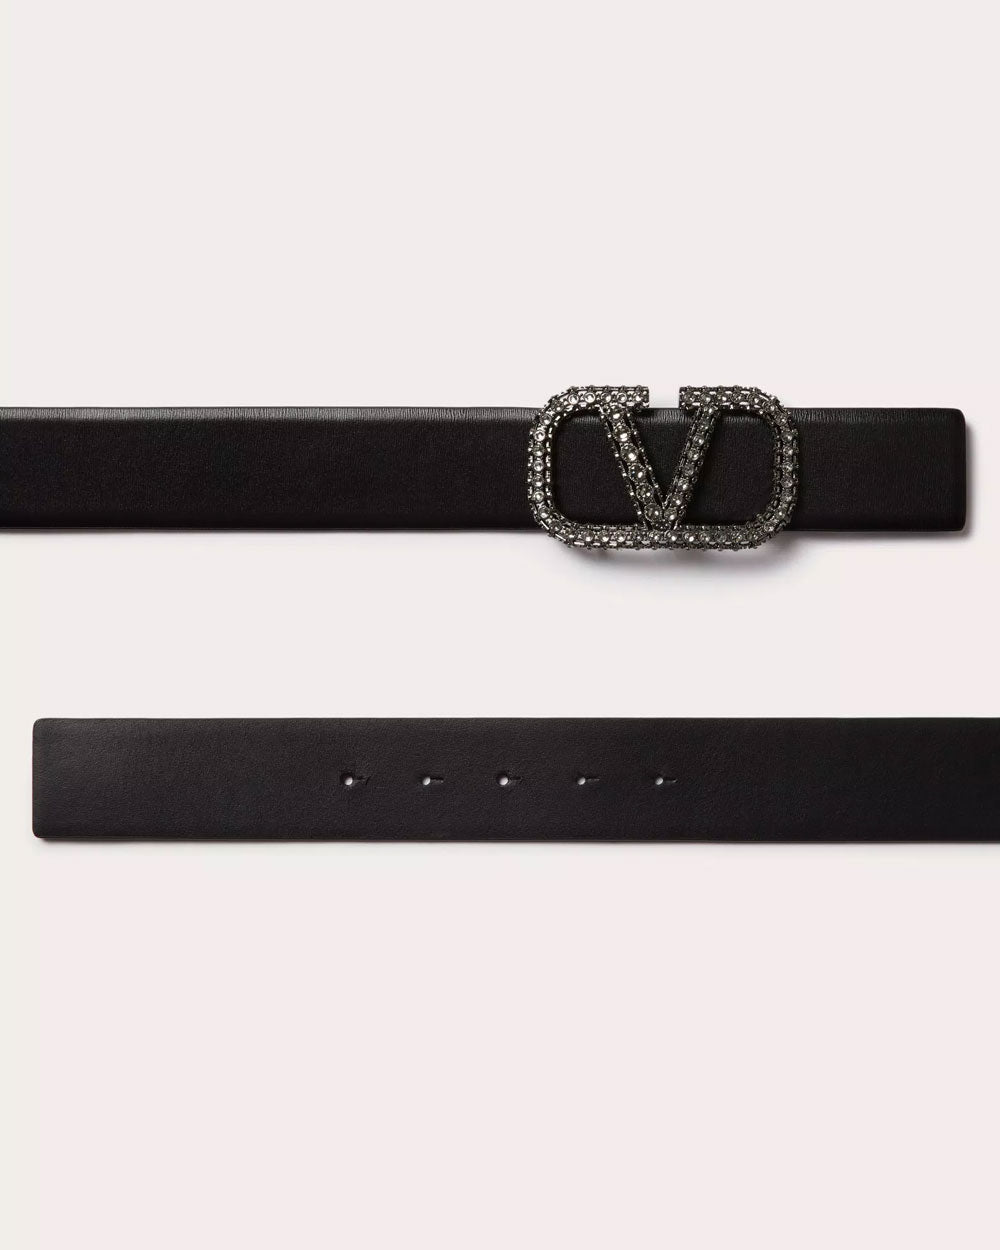 Vlogo Signature Belt in Nero and Black Diamond